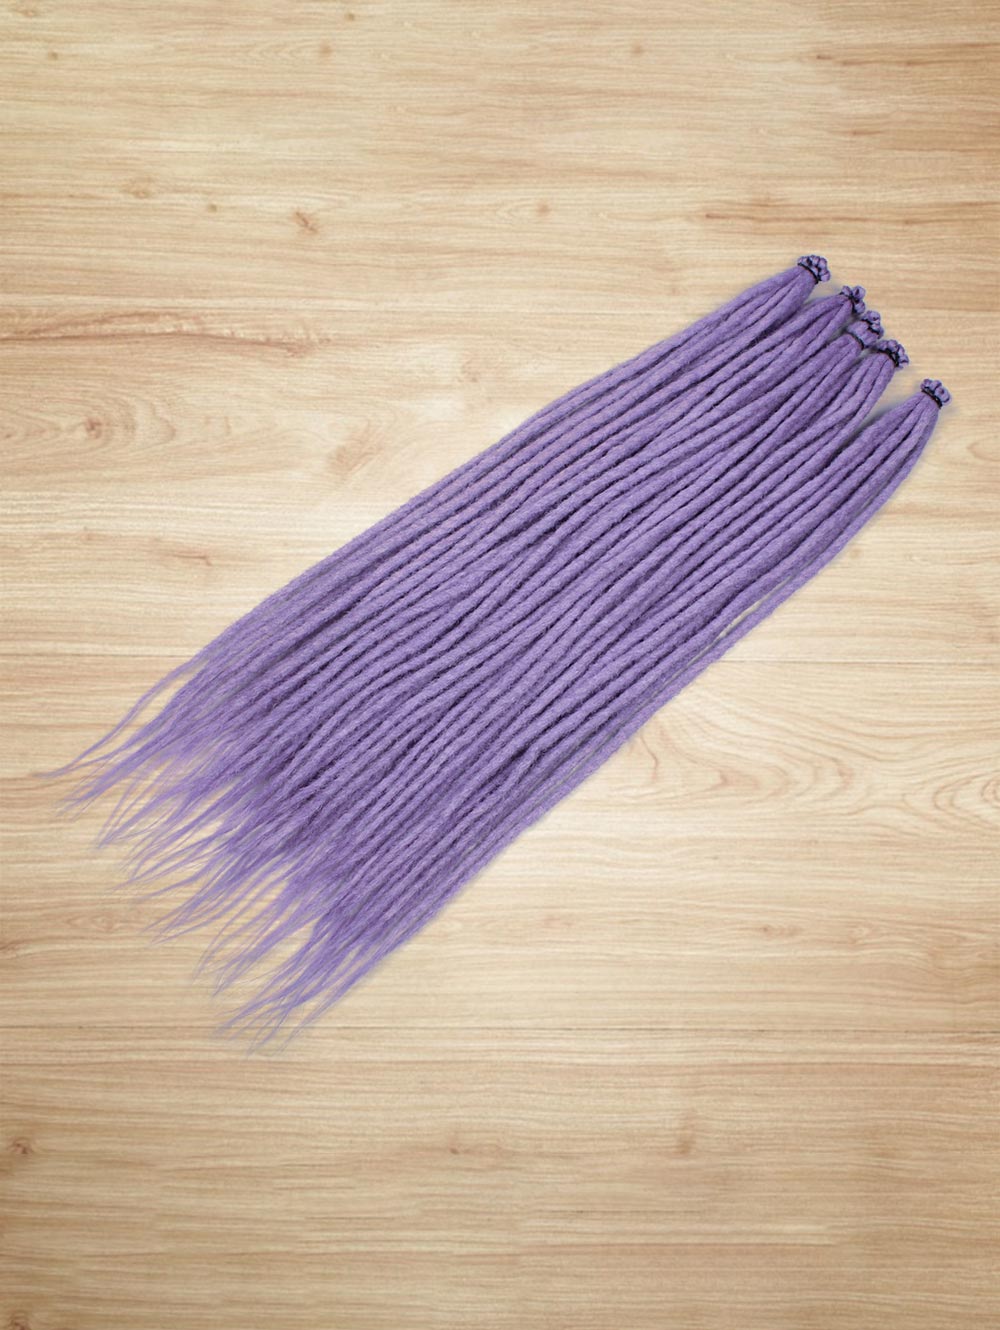 Lavender Purple Thin 0.6cm Synthetic Dreadlocks Extension